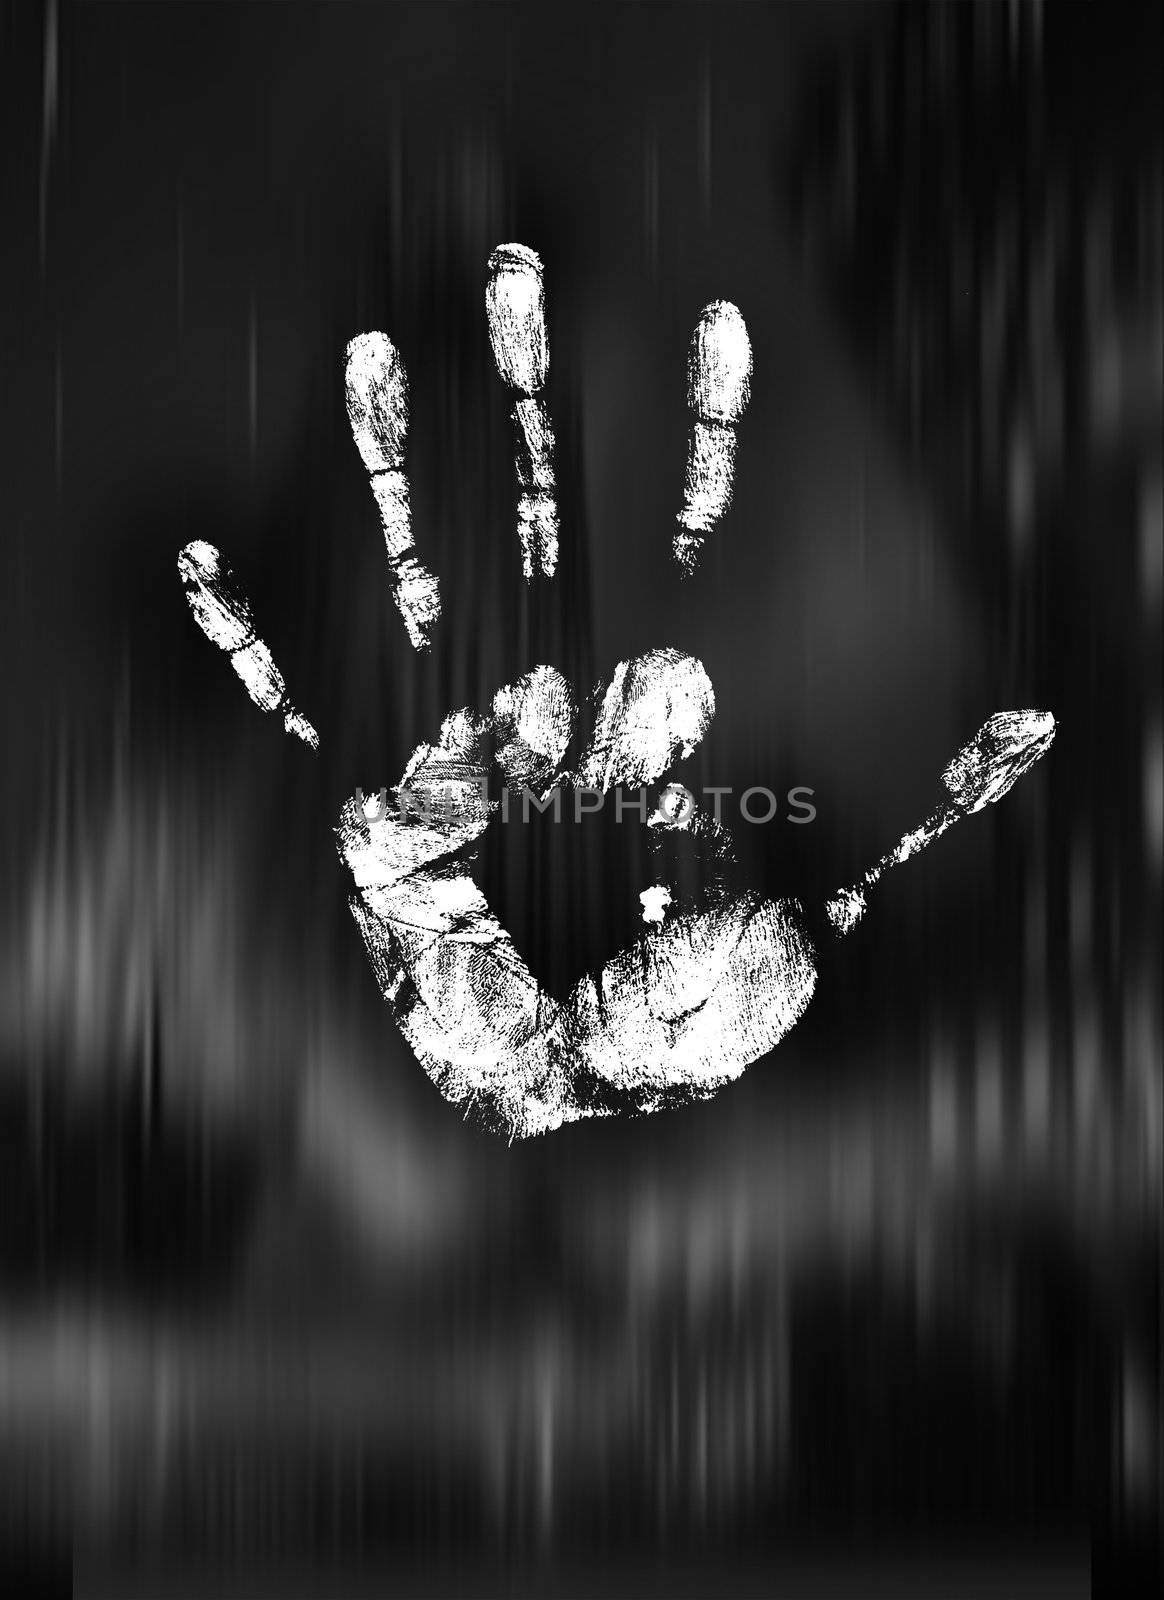 biometric handprint by photochecker